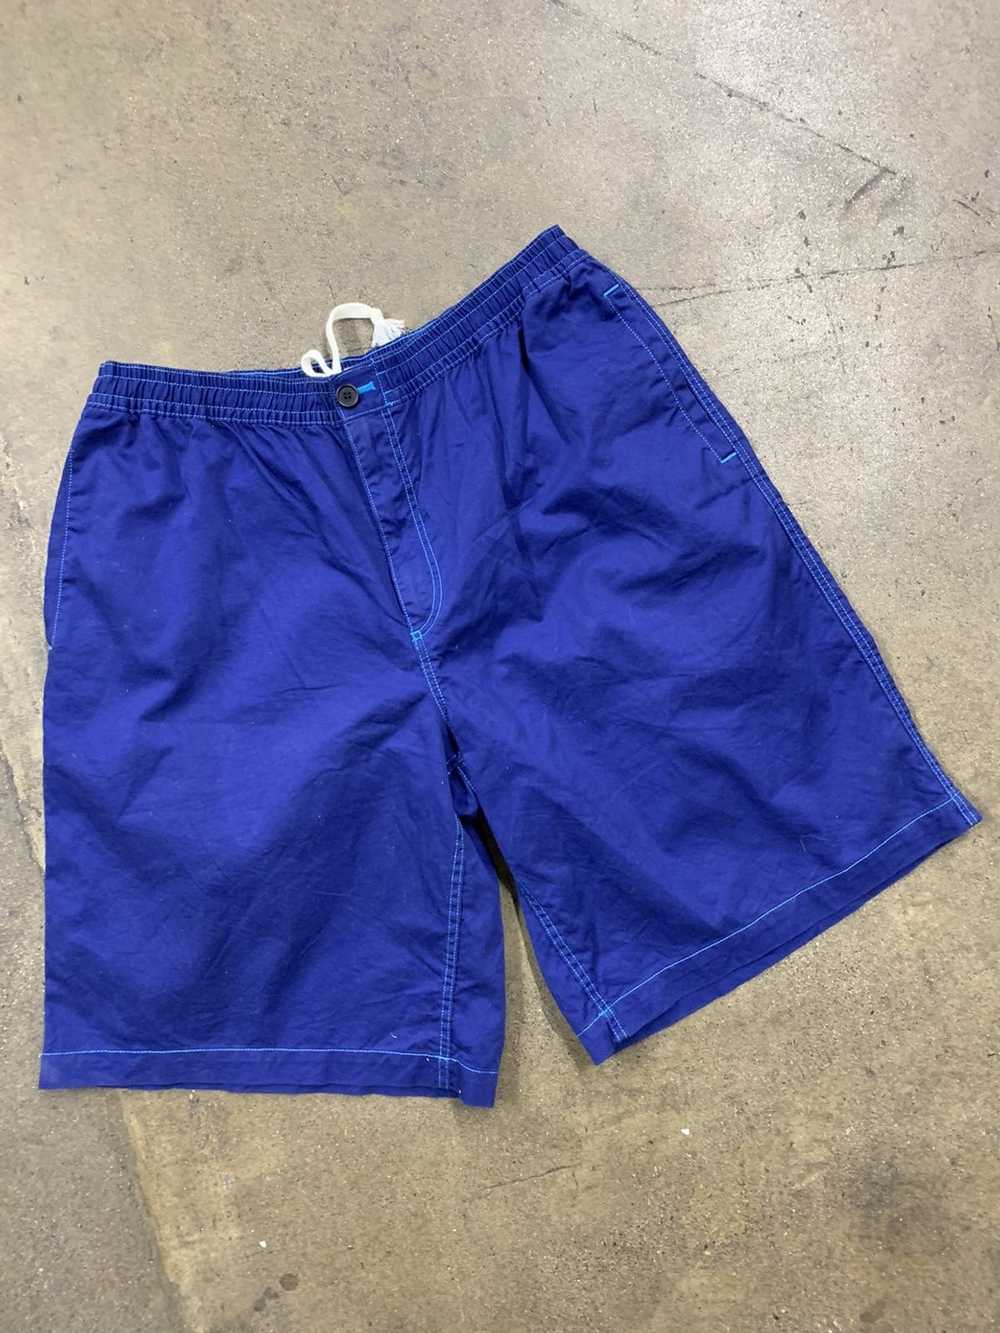 Marni × Streetwear Marni Blue Canvas Shorts - image 1